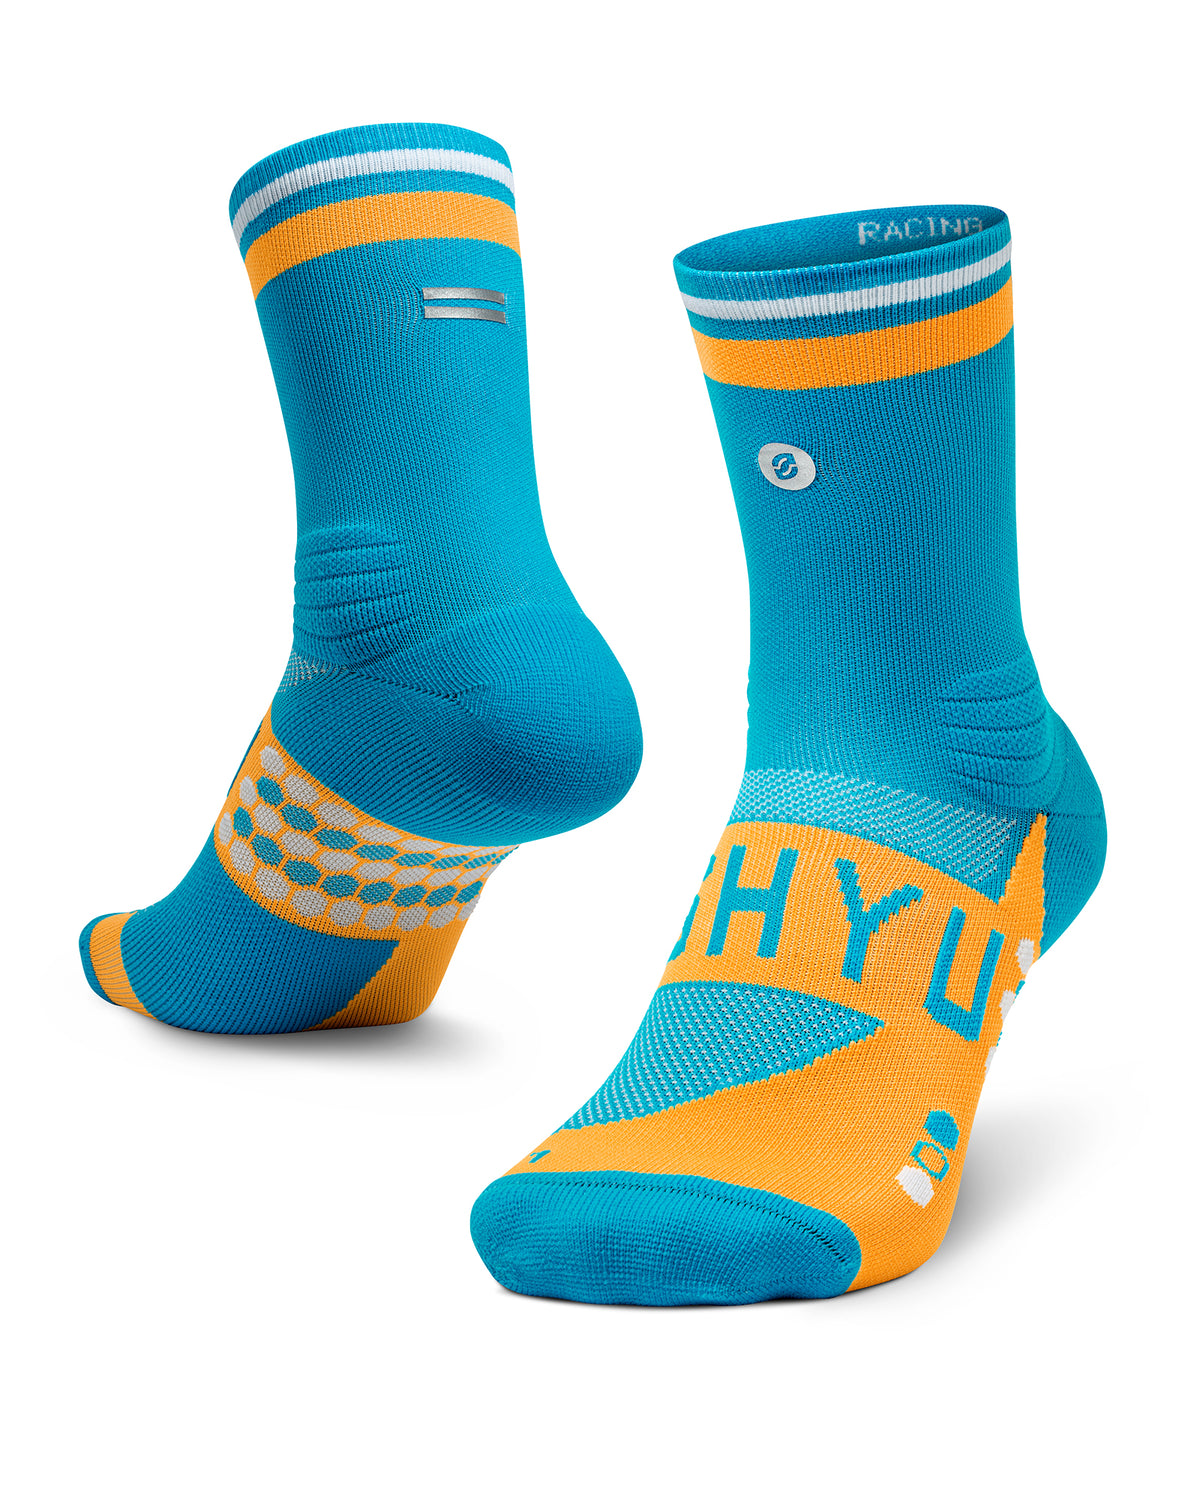 SHYU racing socks - blue | orange | white